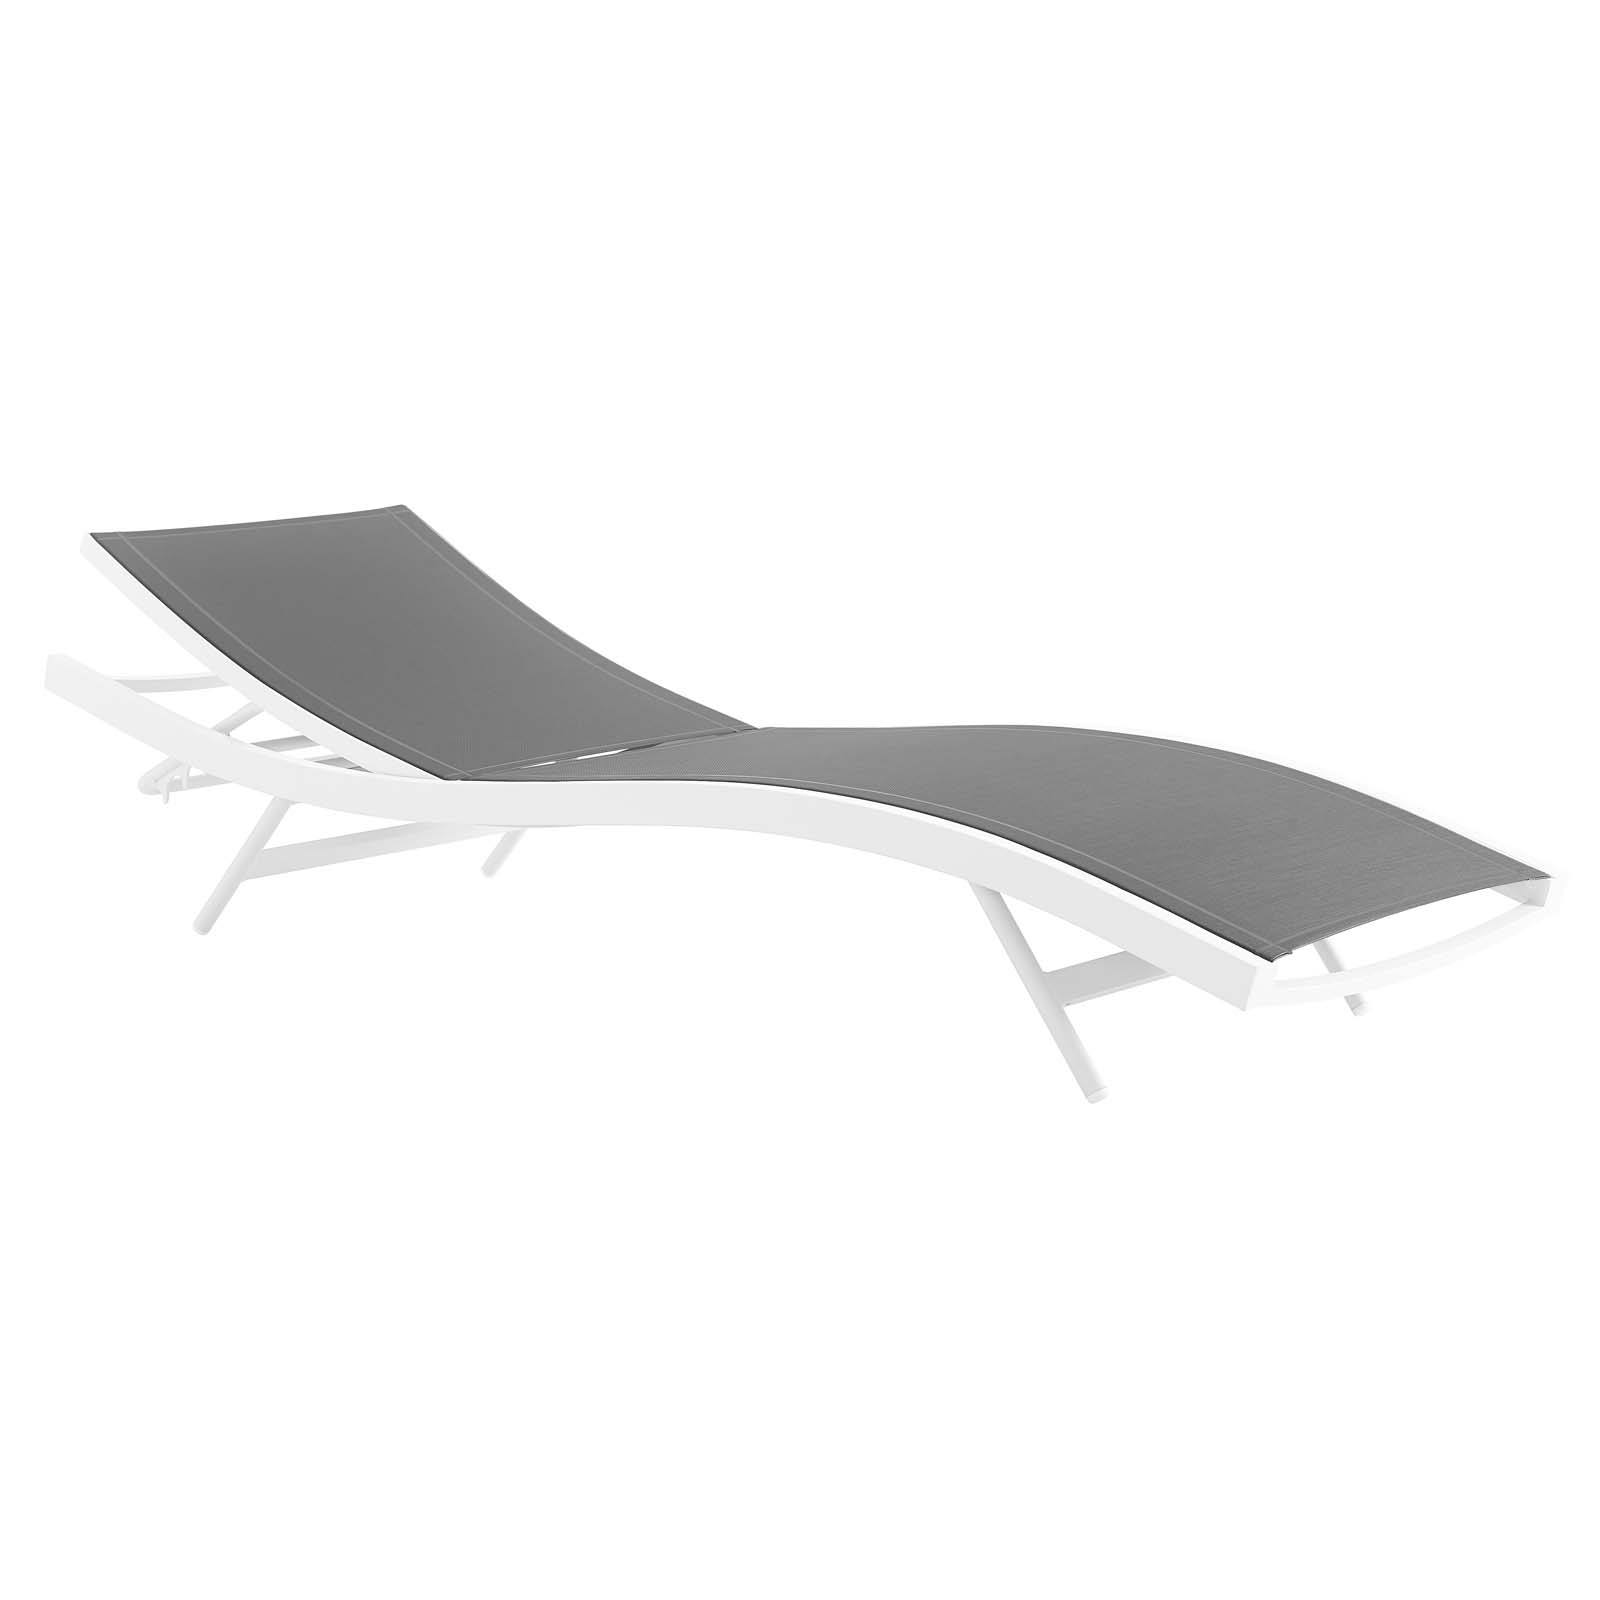 Modern Contemporary Urban Design Outdoor Patio Balcony Garden Furniture Lounge Chair Chaise, Fabric Aluminium, White Grey Gray - image 3 of 7